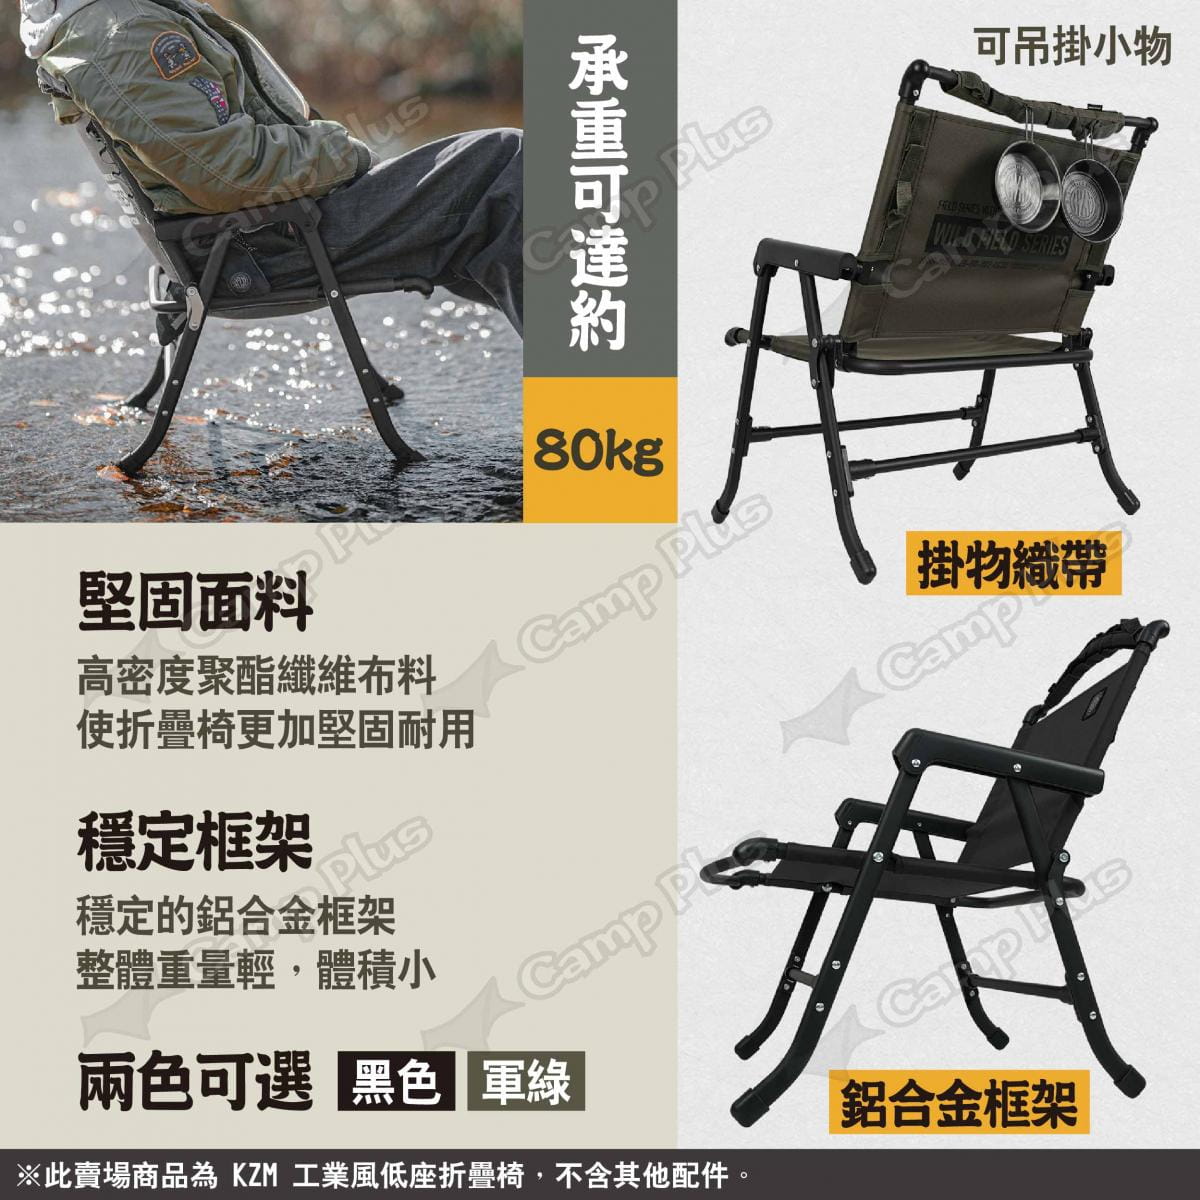 【KZM】工業風低座折疊椅 兩色 K23T1C02KH/BK 悠遊戶外 3